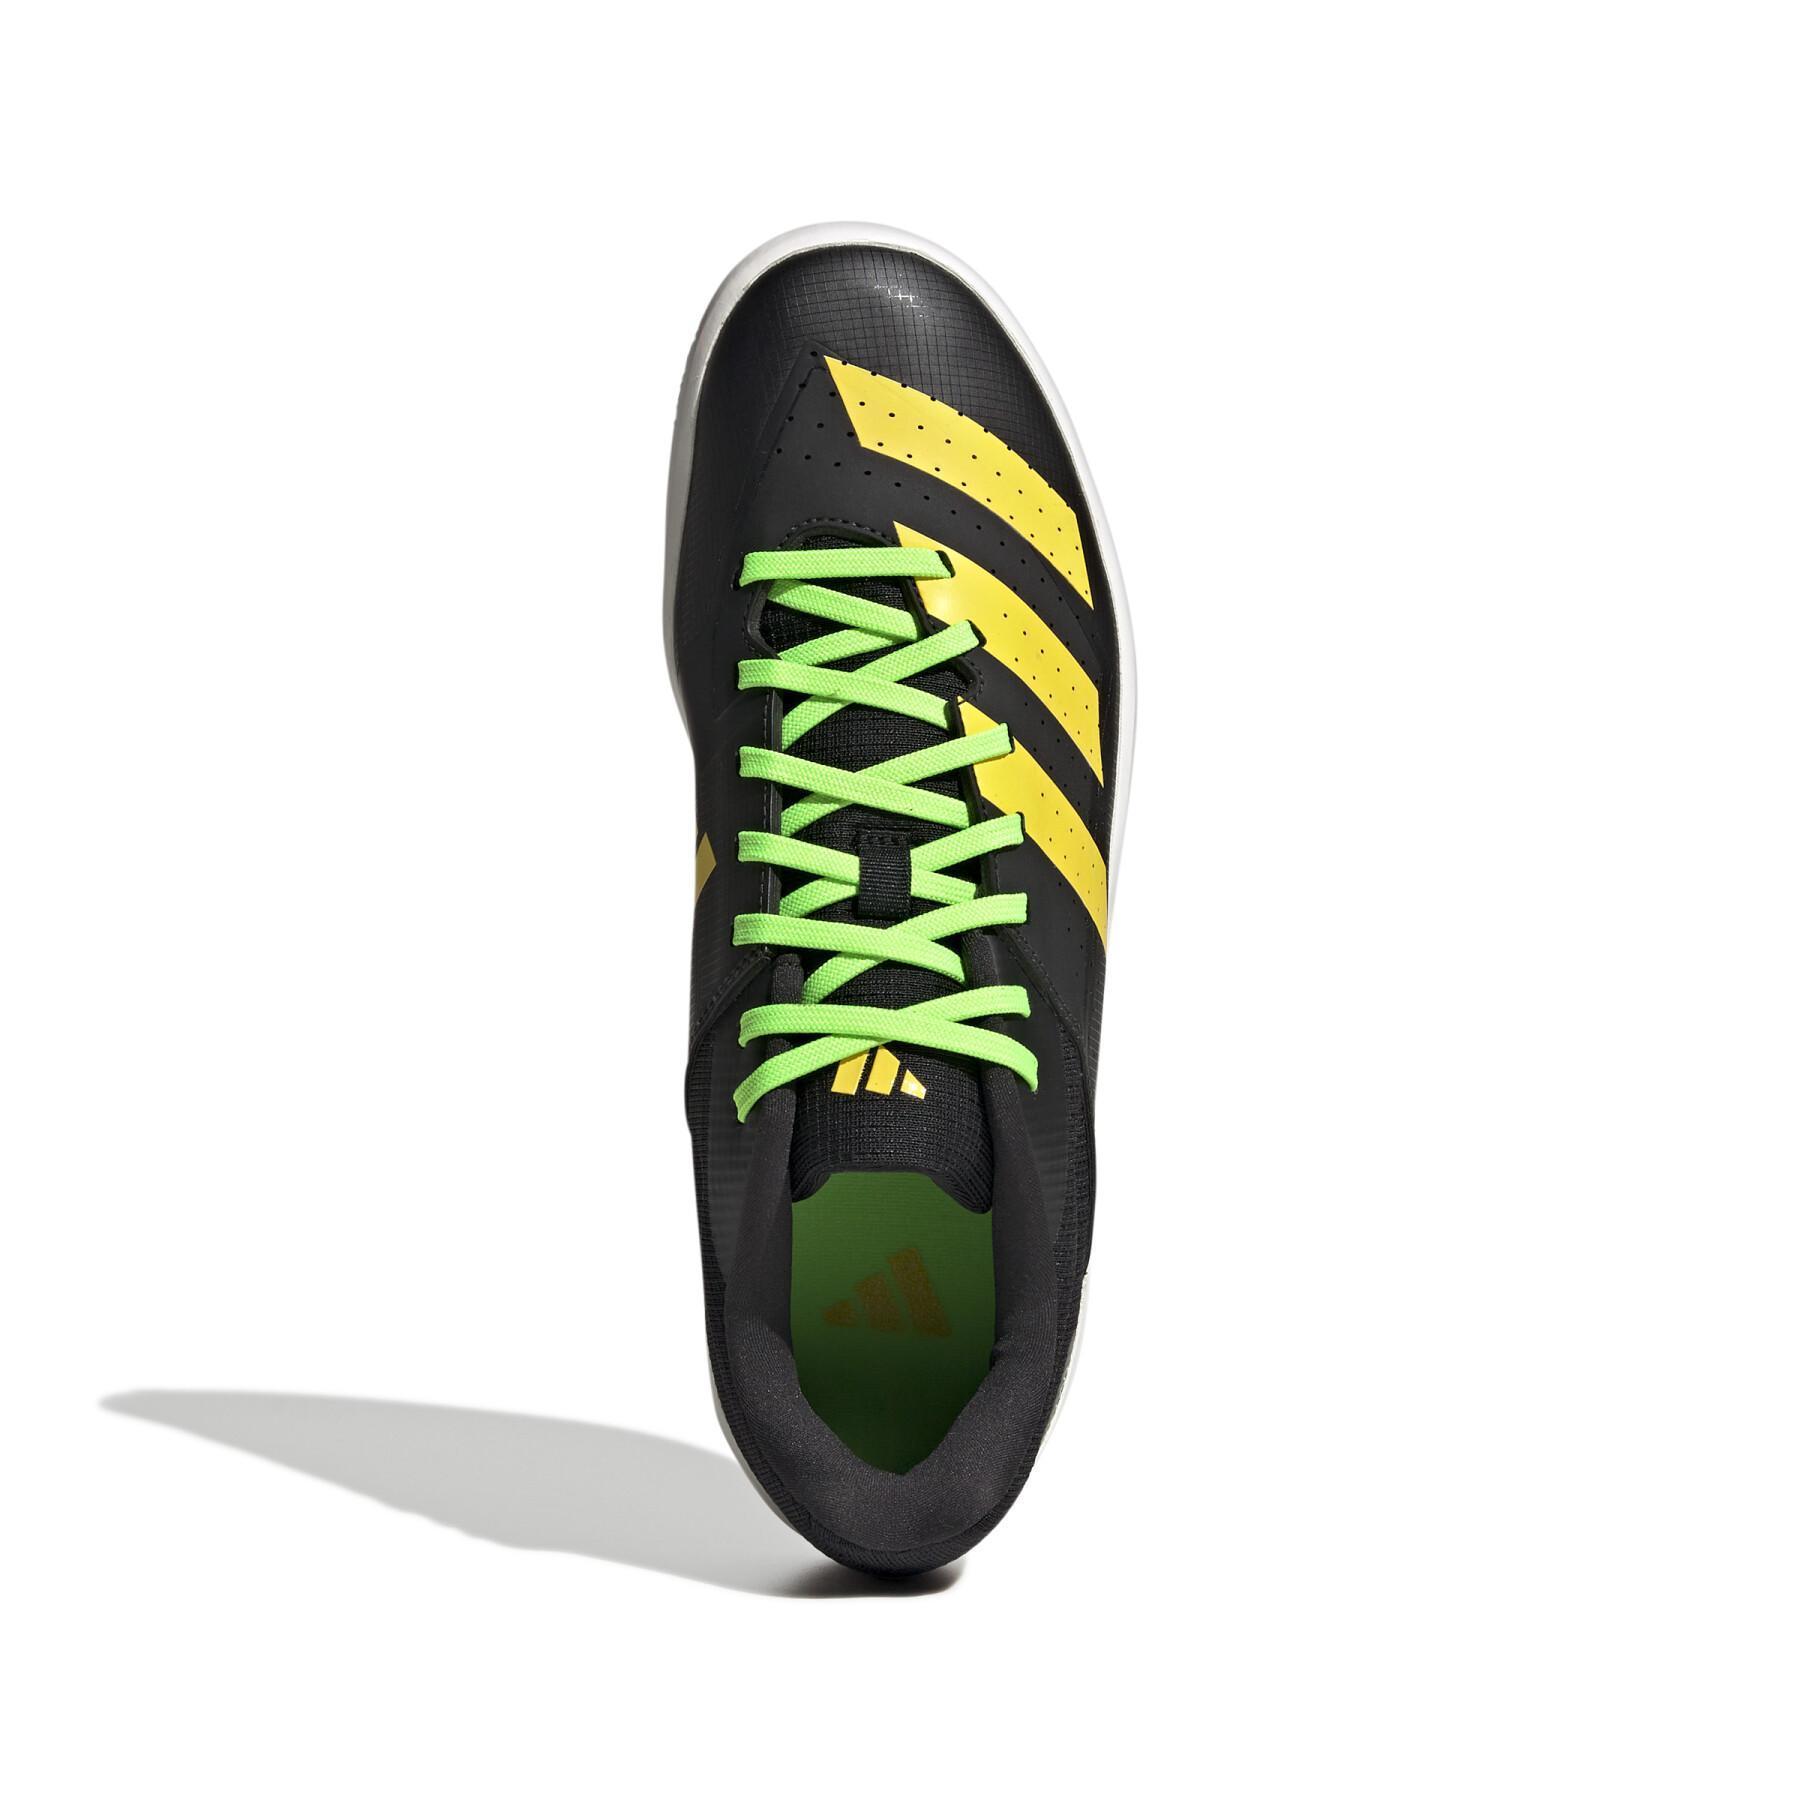 Chaussures d'athlétisme adidas 75 Throwstar